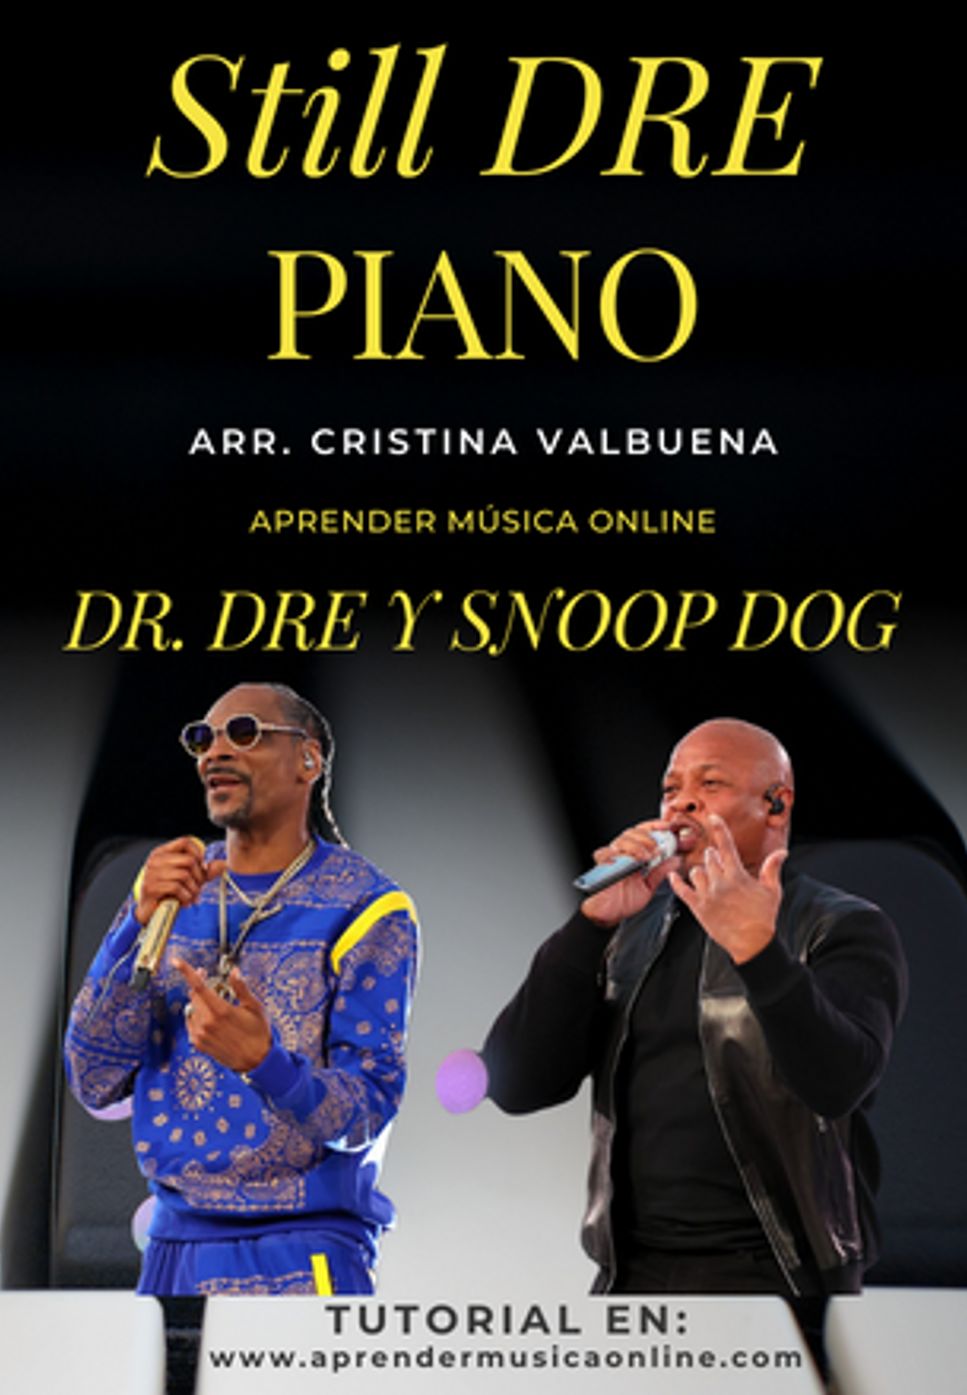 Dr. Dre feat Snoop Dog - Still DRE by Cristina Valbuena